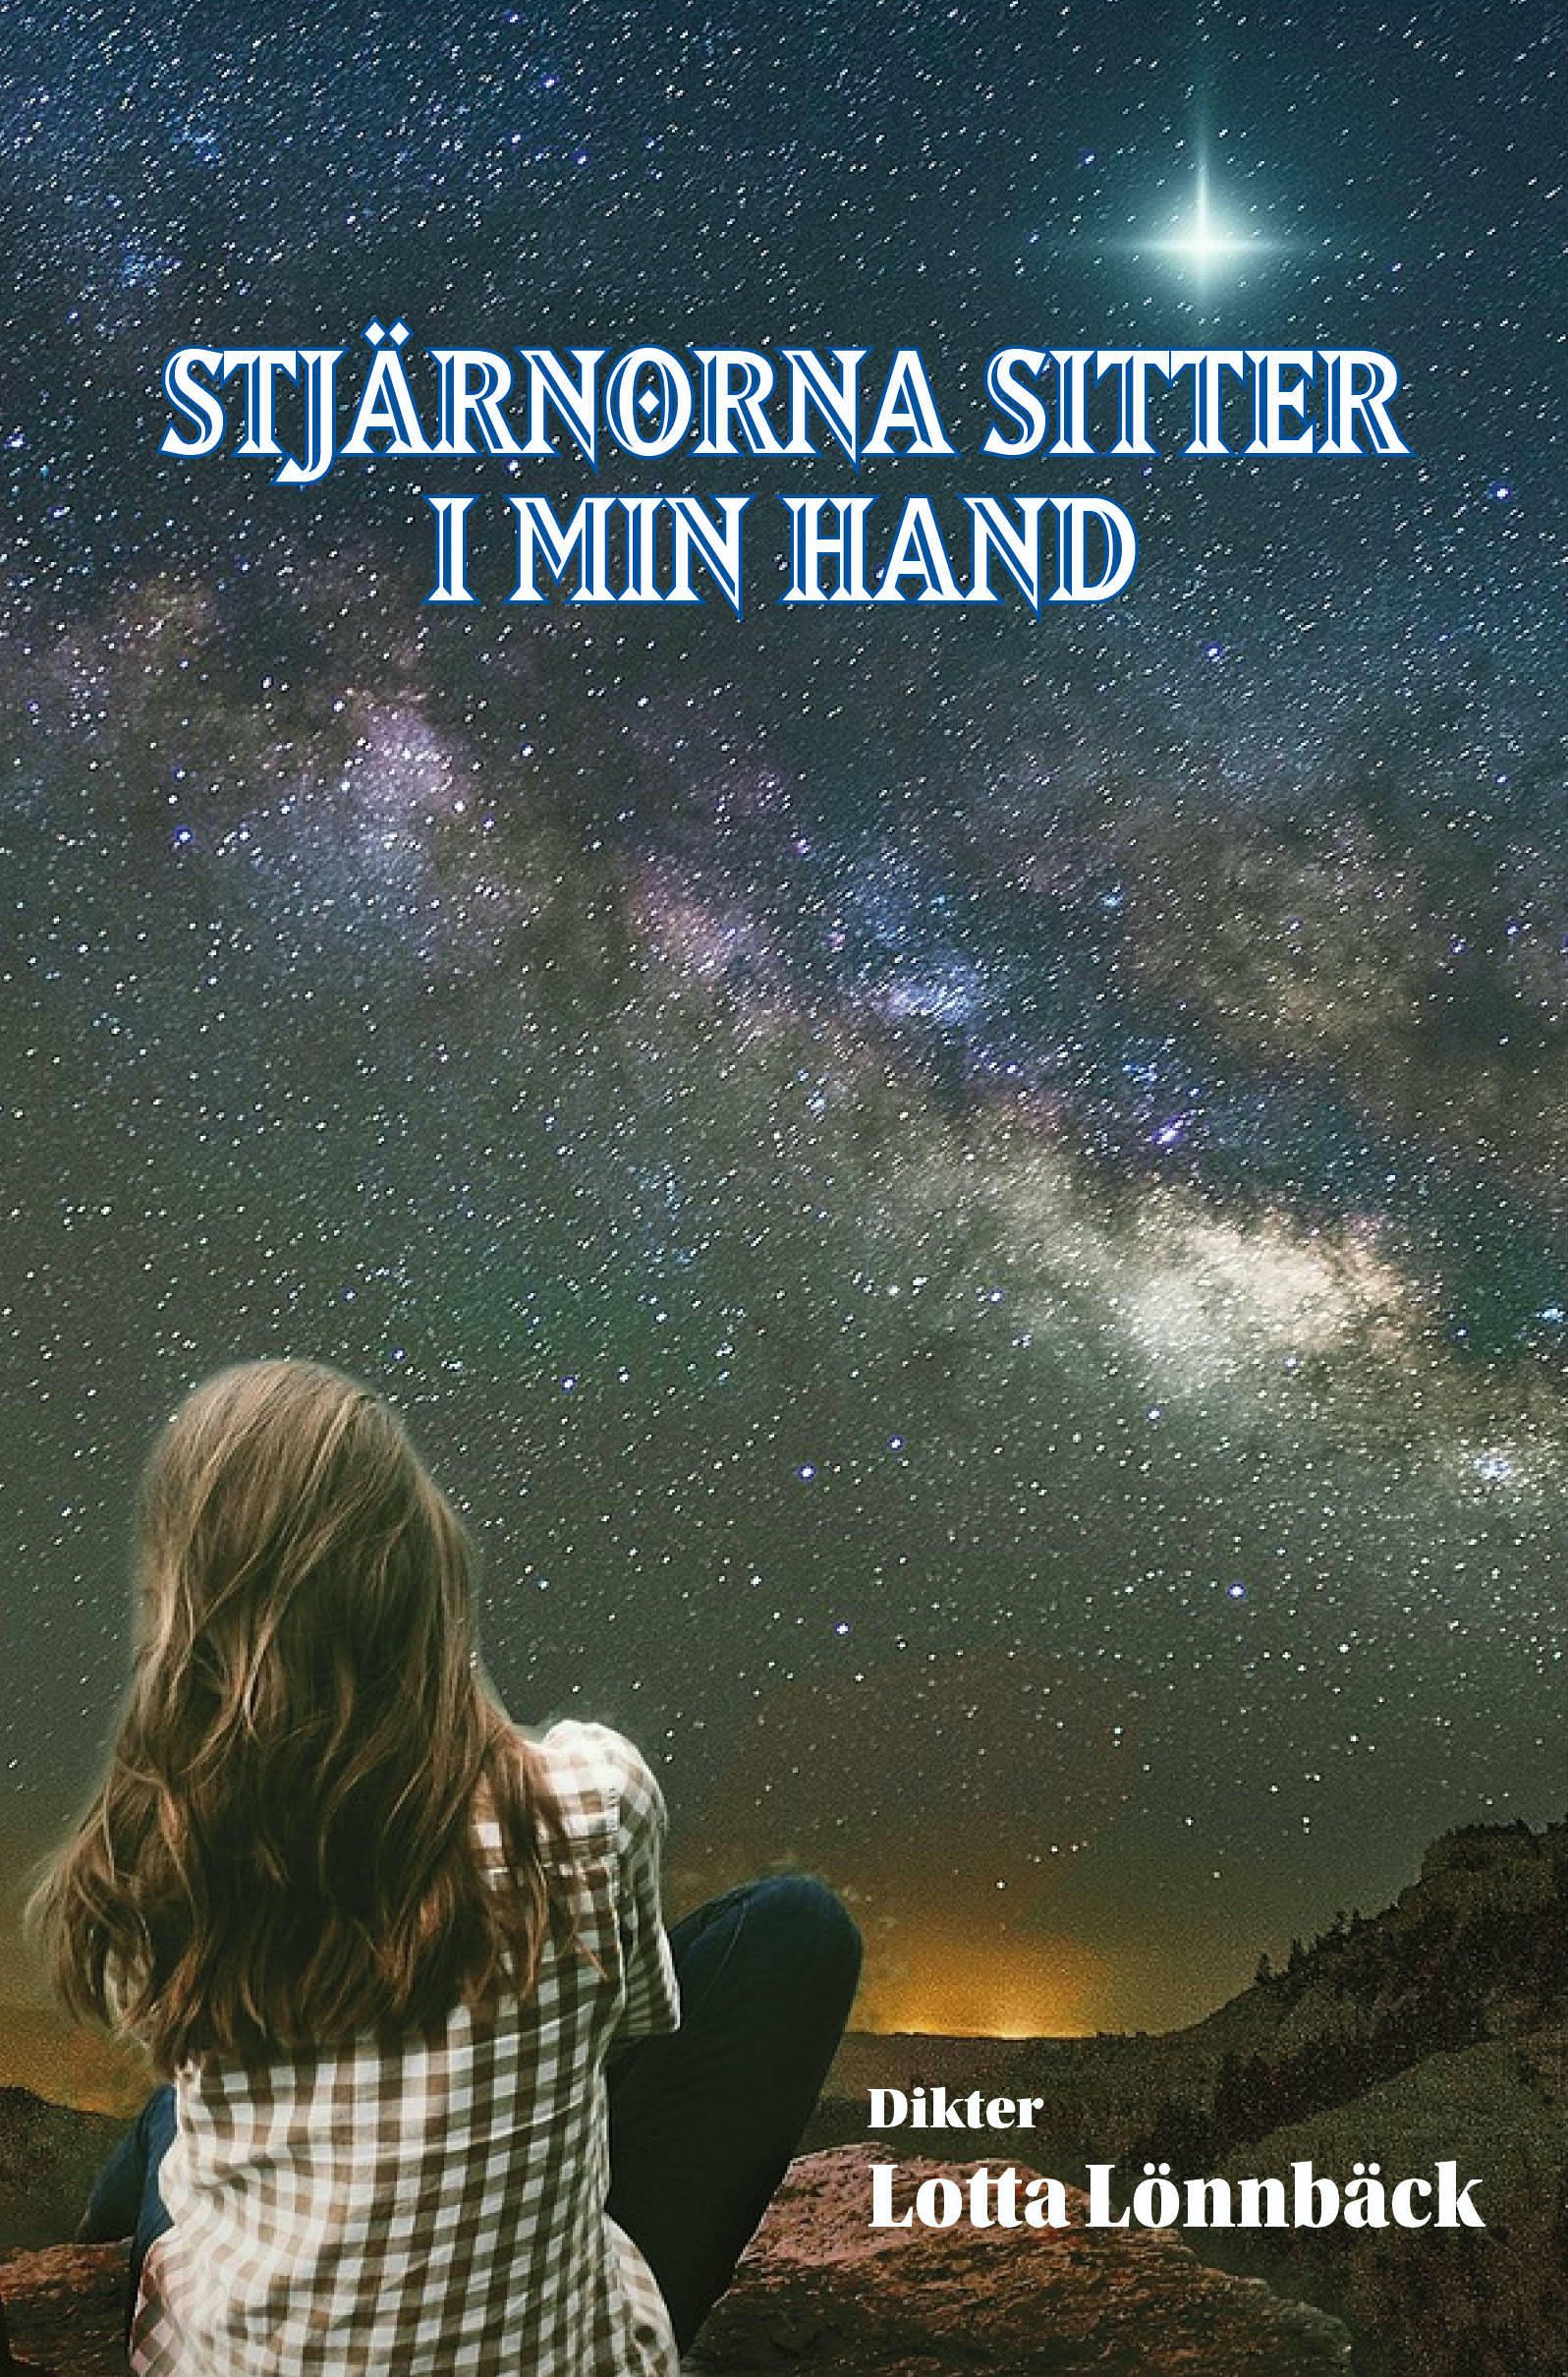 Stjärnorna sitter i min hand, e-bog af Lotta Lönnbäck